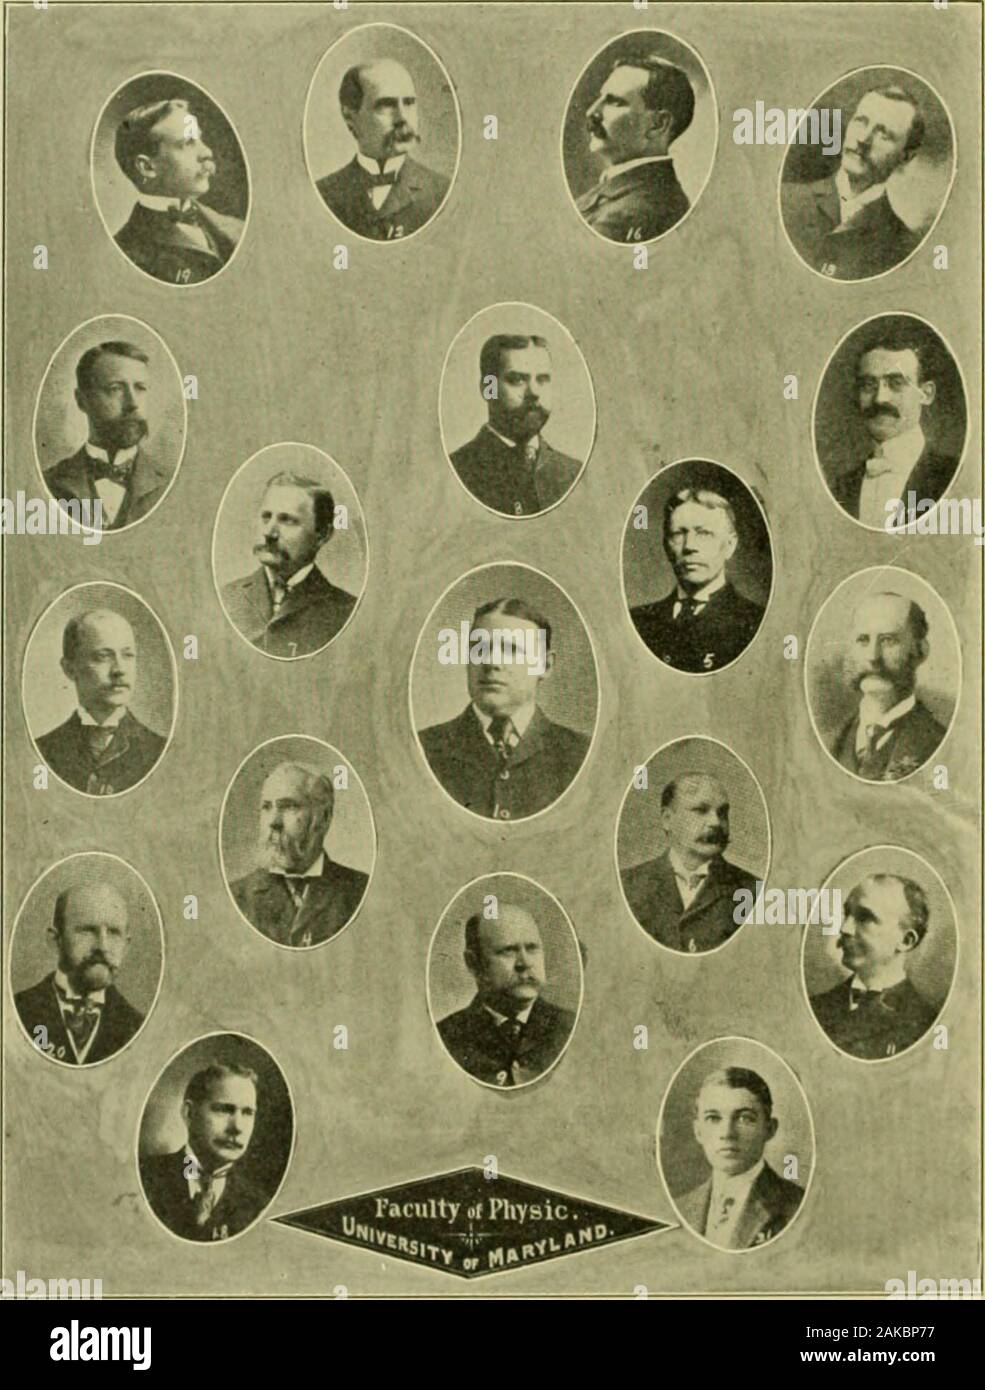 Bones, molars, and briefs . H CO O t-it7) 2 &lt; i6 Board of Regents of the University of Maryland rlERNARD CARTF.R. LT,. D SAMUEL C. CHEW, M. D. HON. JOHN P. POE. HON. CARLES E. PHELPS. JOHN C. HEMMETER, M. D. F. J. S. GORGAS, M. D., D. D. S. JAMES H. HARRIS, M. !)., D. D. S. R DORSlLY COALE, Ph. D. Pruvost. RICILARD M. VENABLE, ESQ. RANDOLPH WINSLOW, M. D.THOMAS A. ASHBY, M. D.WILLIM T. I.RANTLEV, ESQ.HON. HENRY T. HARLAN.L. E. NEALE, M. D.CHARLES W. AHTCHELL. M. D.J HOLMES SAHTH, M. D. y M. R. CULURETH, M. D. 17. University of Maryland Faculty of Physics GEORGl; W. MILTENBERGER, M. D.,EiiK Stock Photo